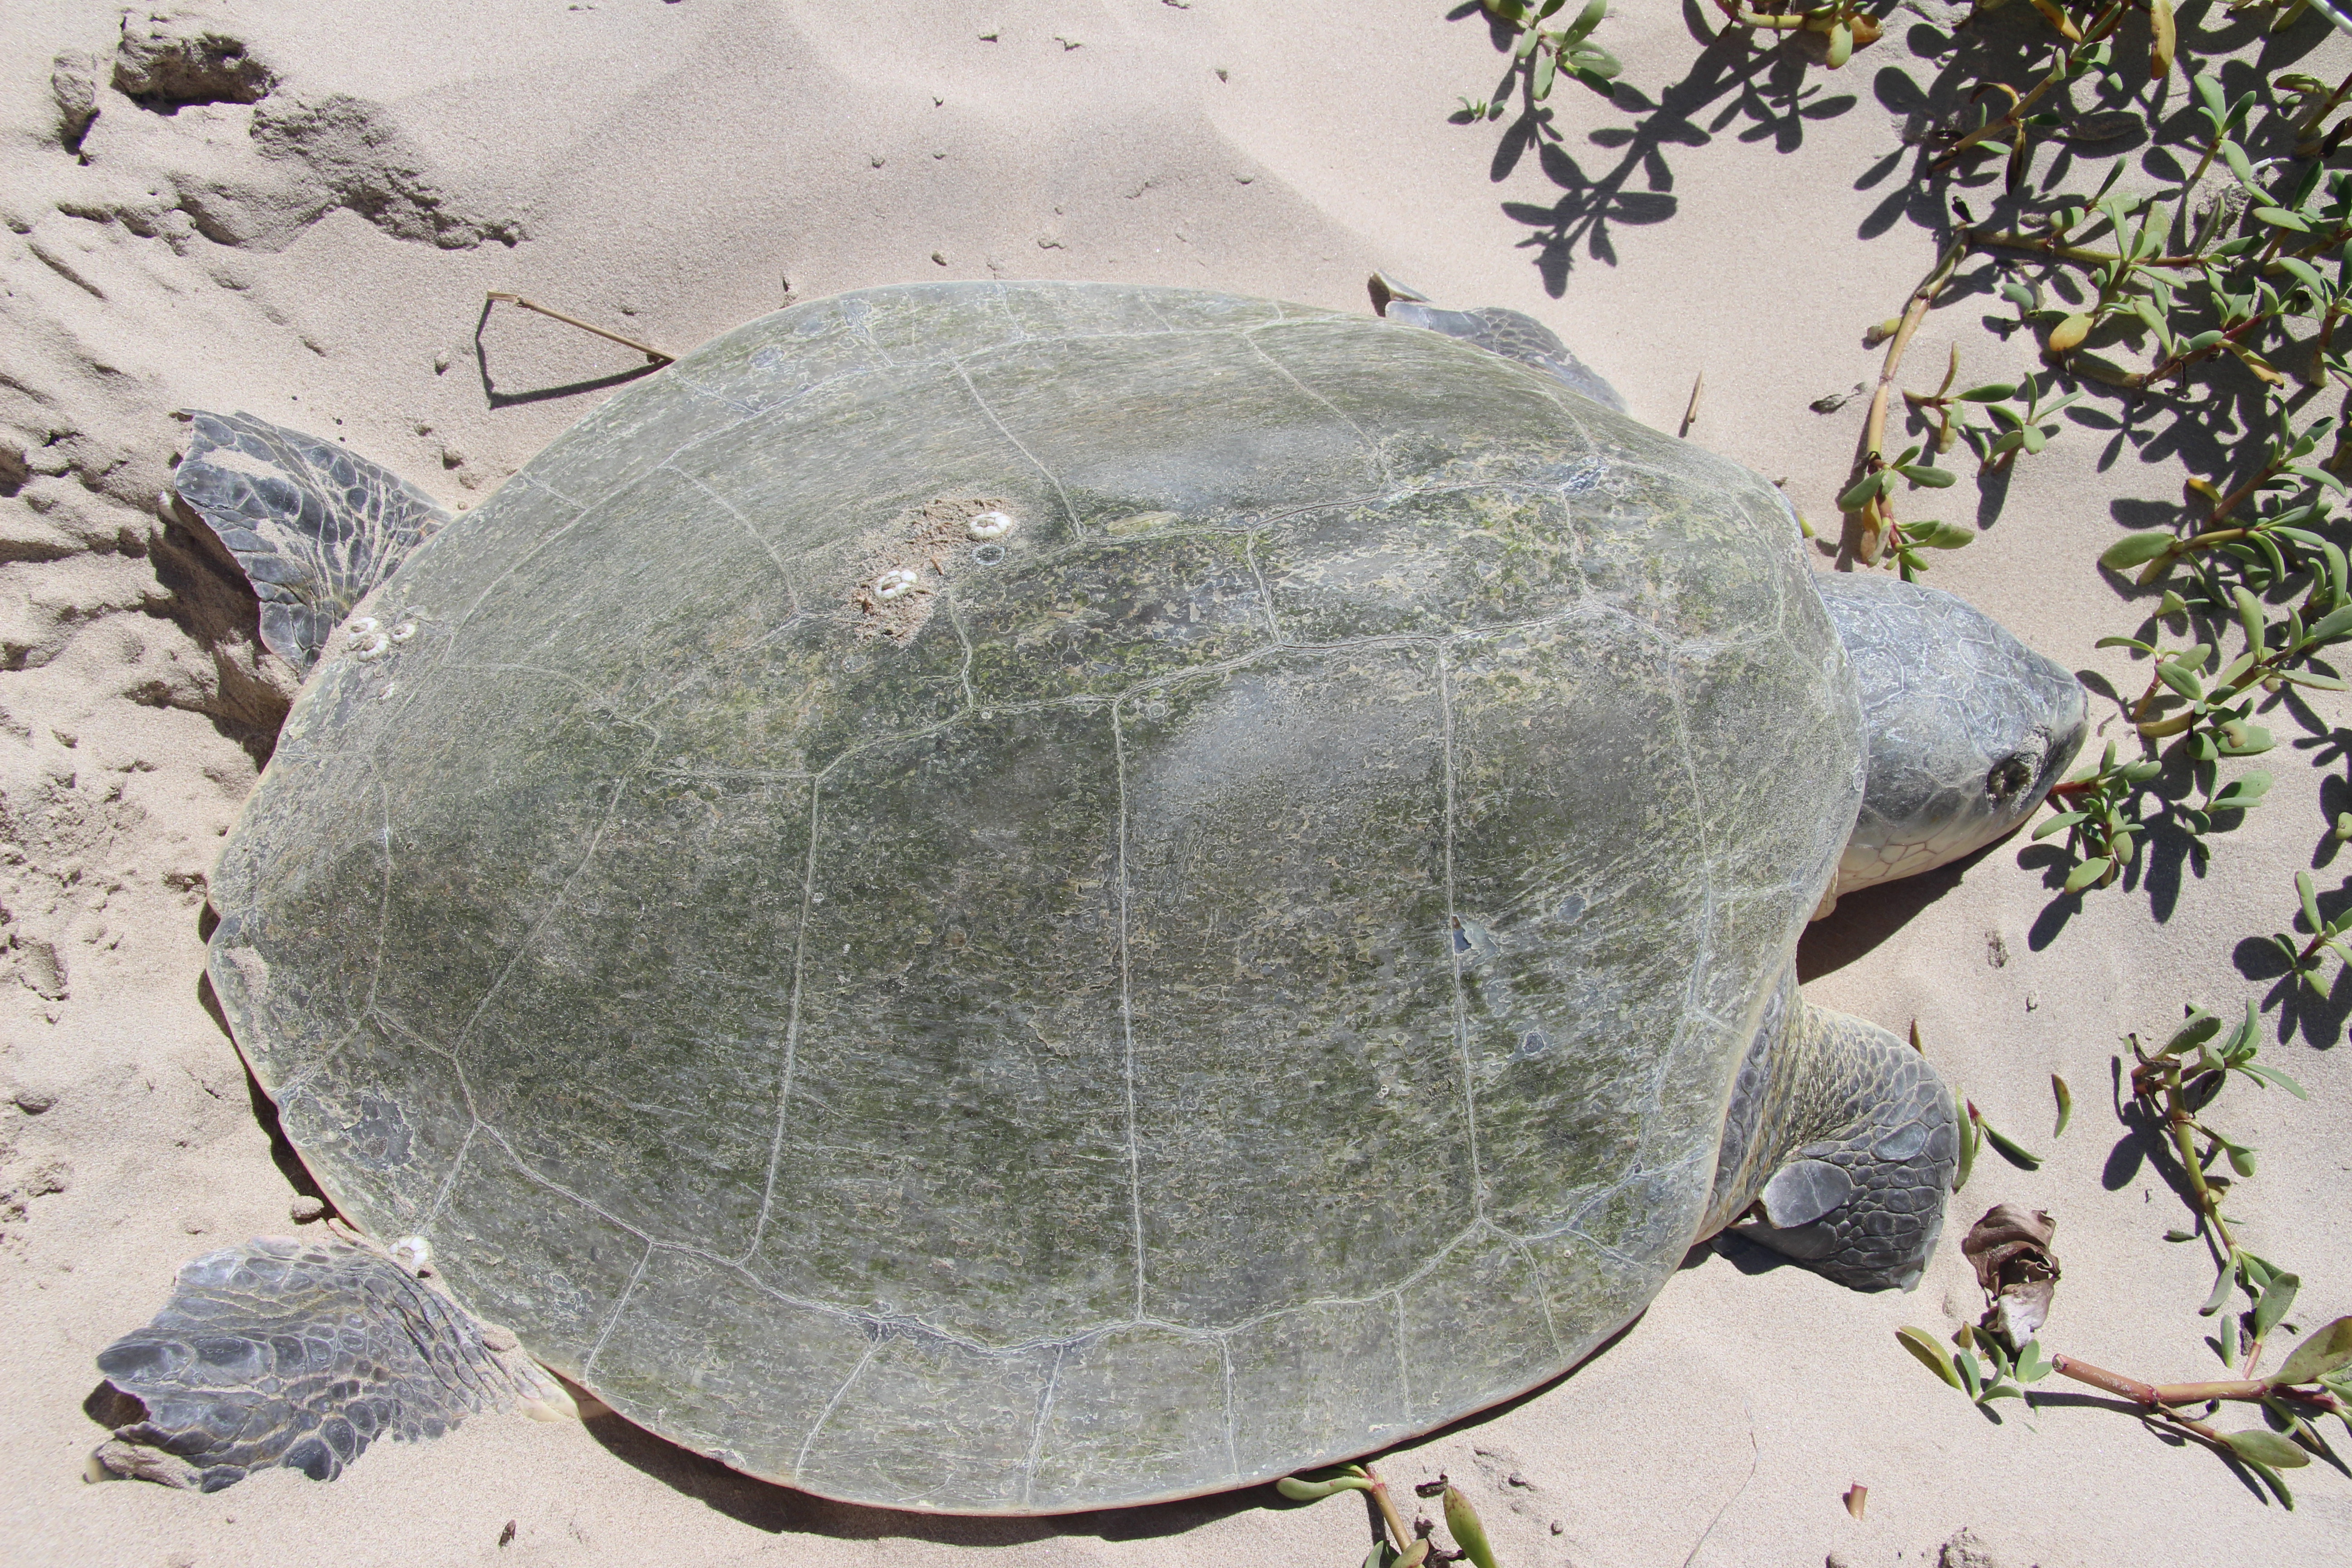 Kemp's ridley sea turtles - Padre Island National Seashore (U.S. National Park Service)